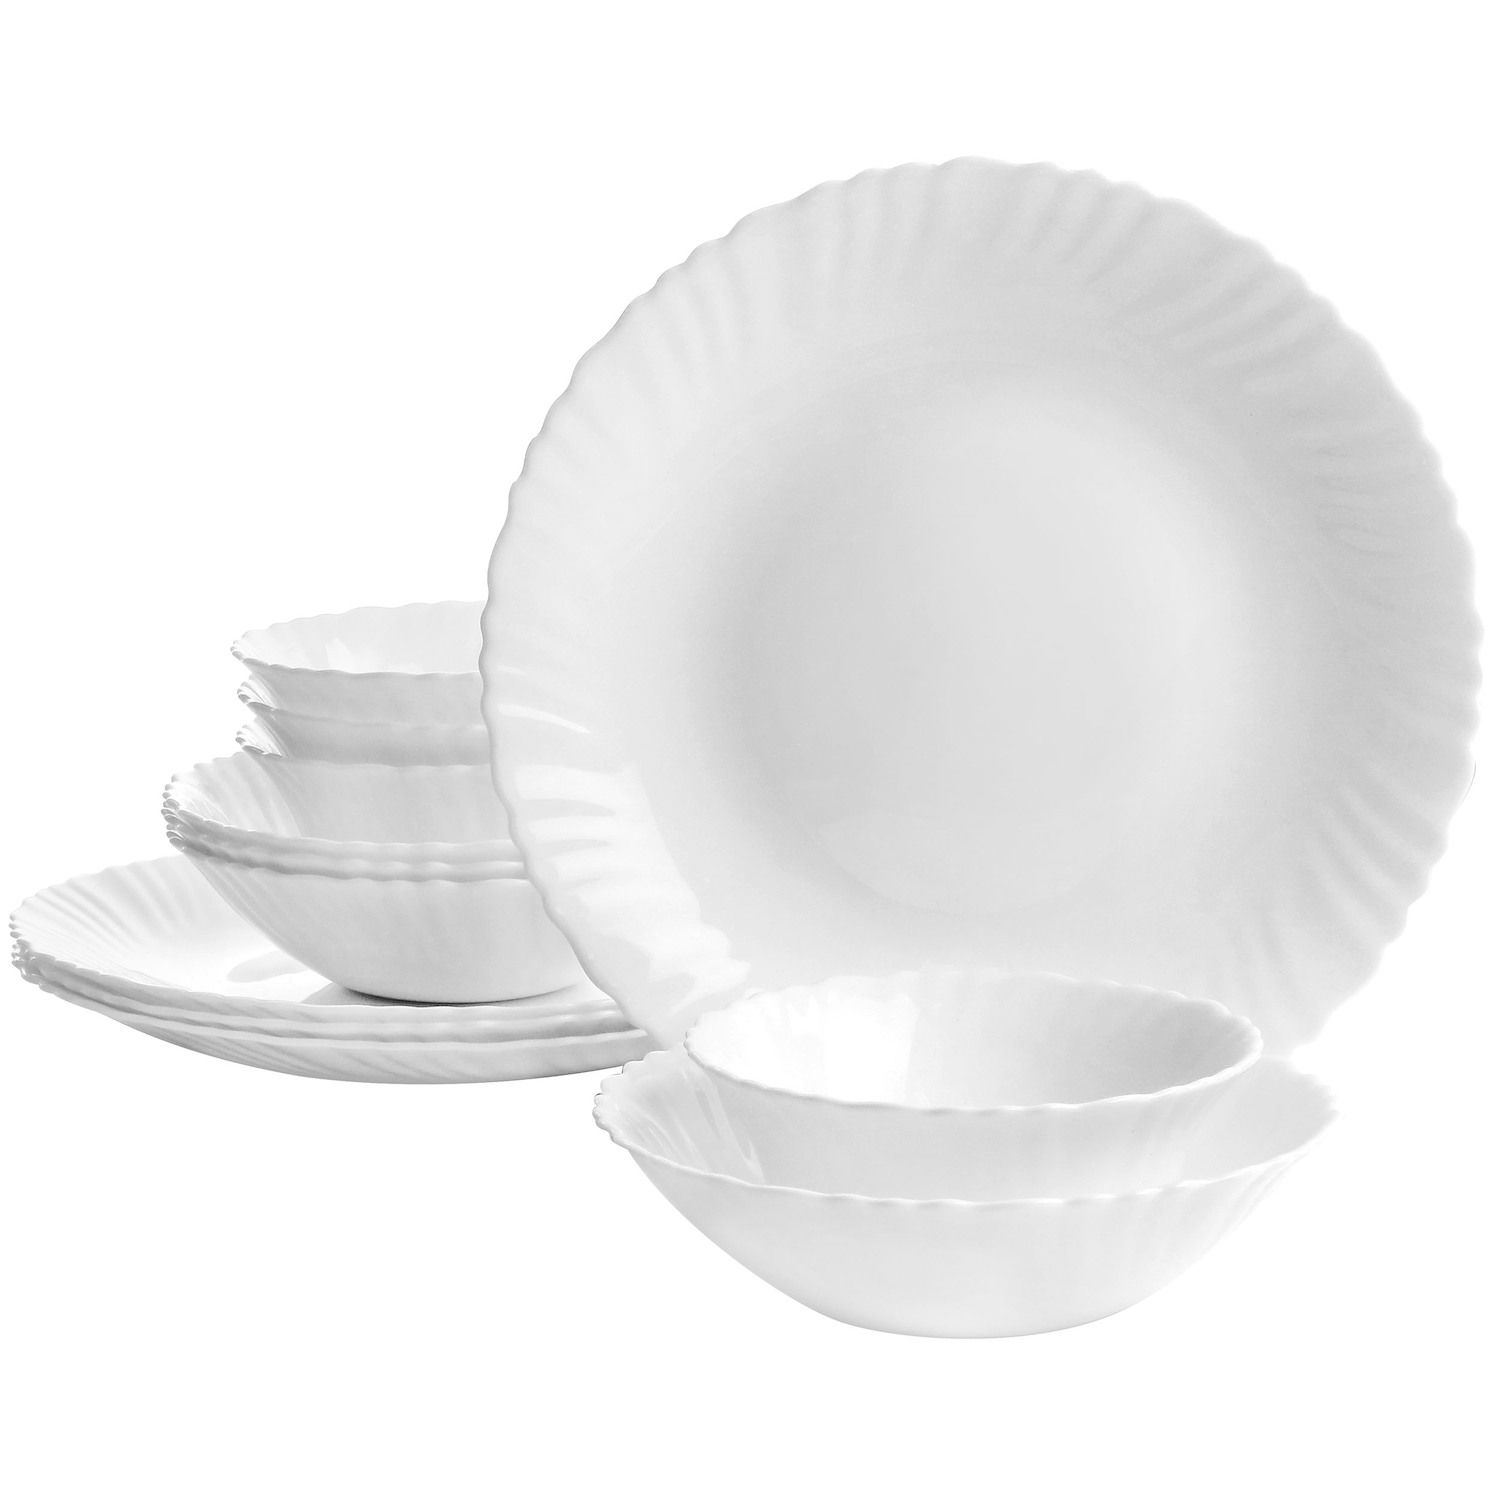 Oster Juego De Vajilla 16 Piece Opal Glass Dinnerware Set in White 